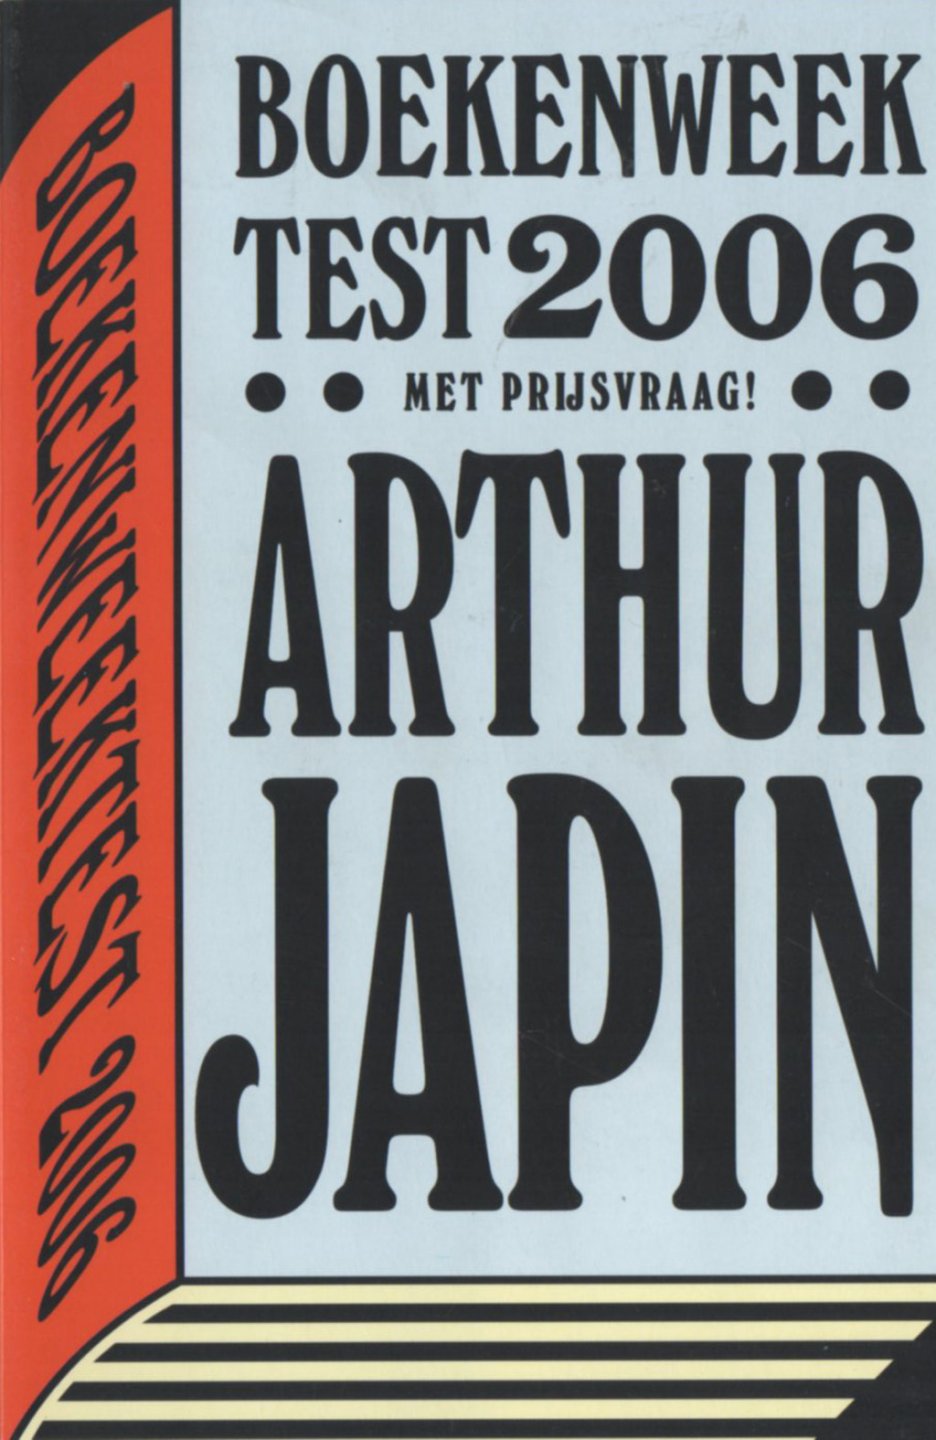 Enschedé, Just - Boekenweektest 2006 Arthur Japin